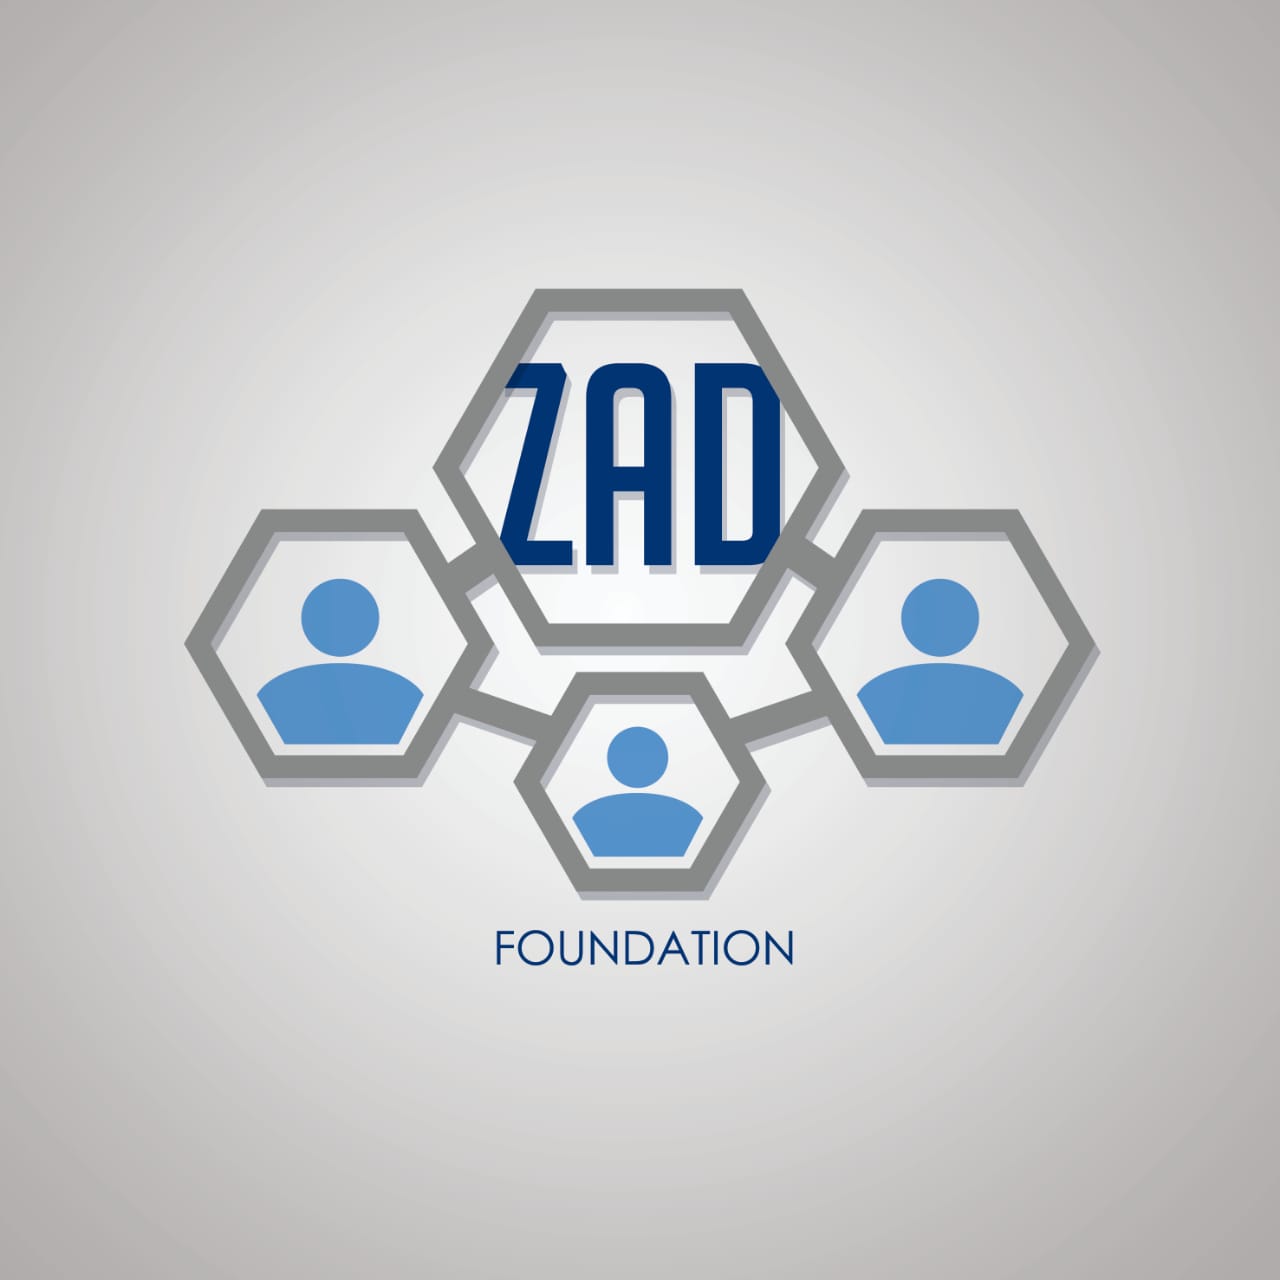 ZAD foundation